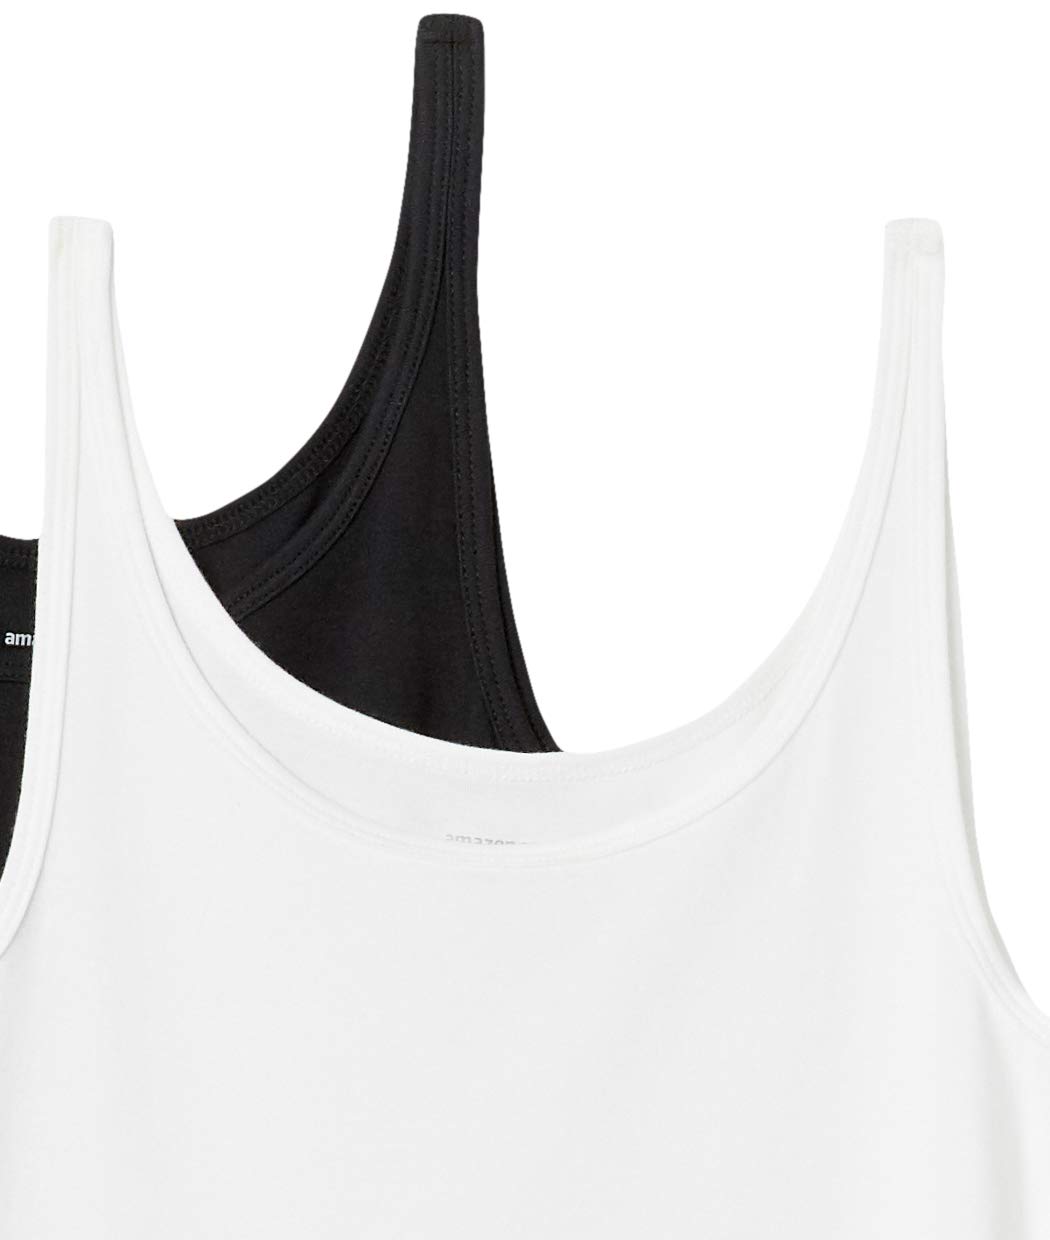 Amazon Essentials Women's Slim-Fit Thin Strap Tank, Pack of 2